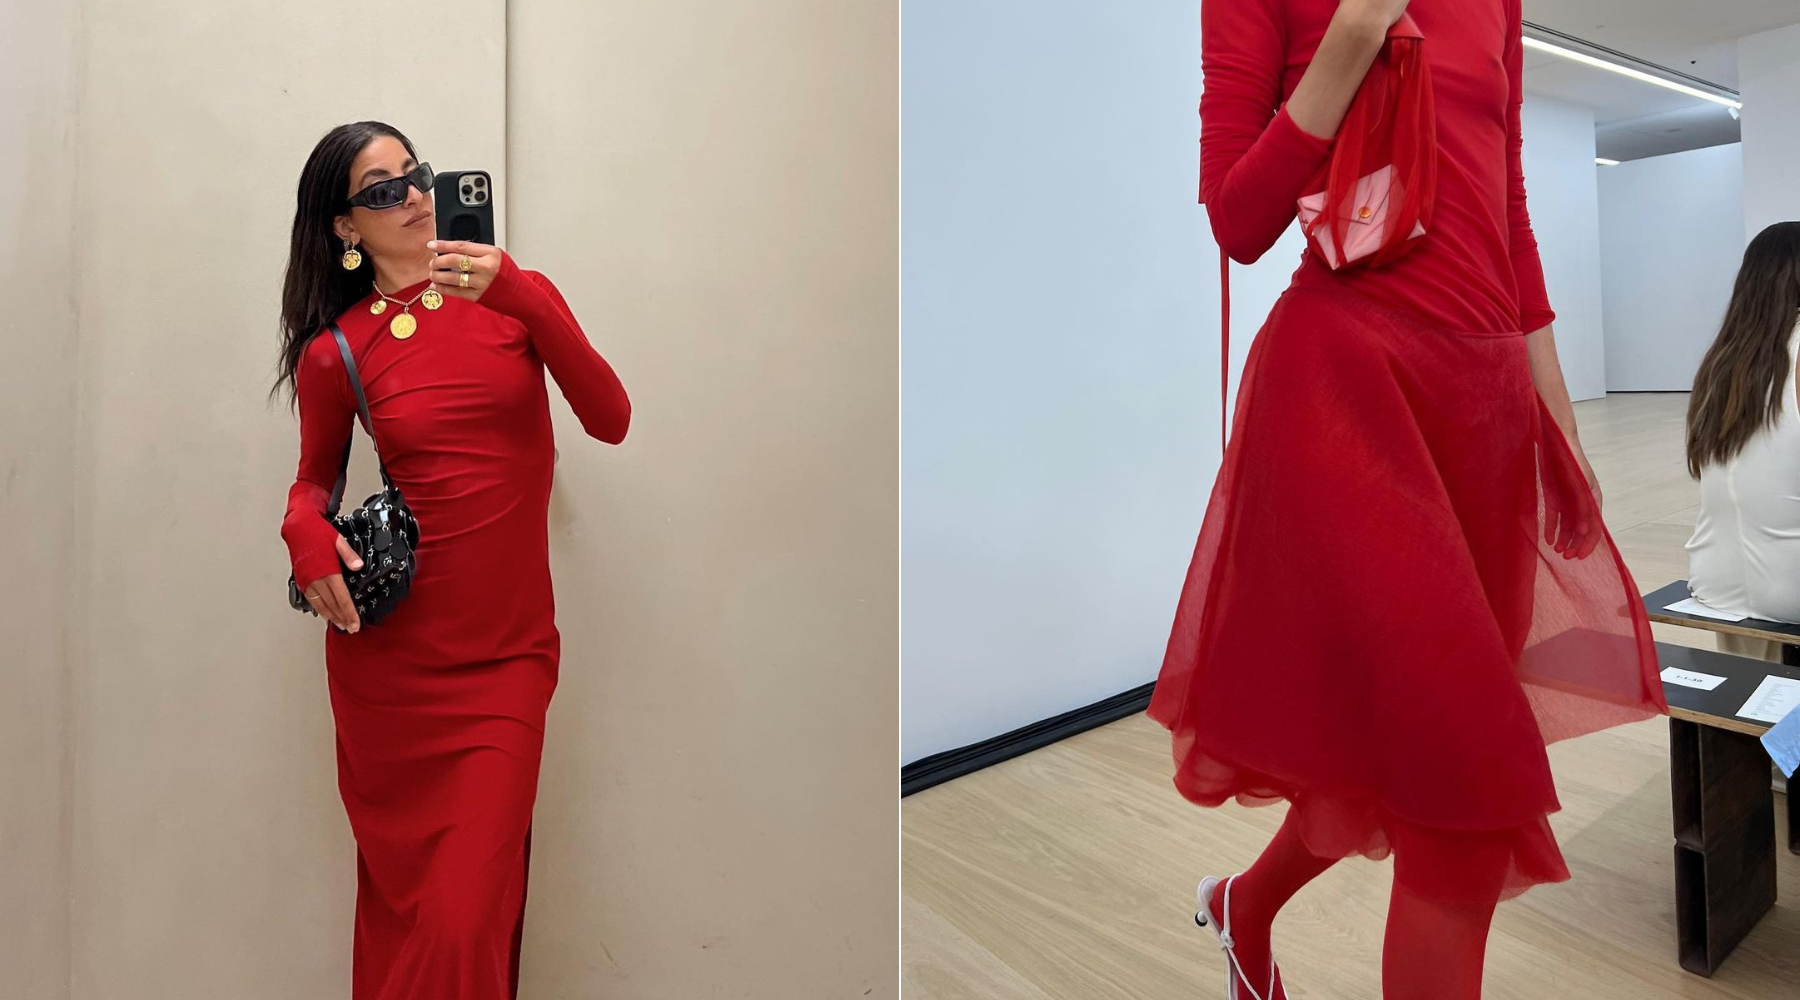 љубав, but make it fashion: Crvena haljina je uvek dobar izbor